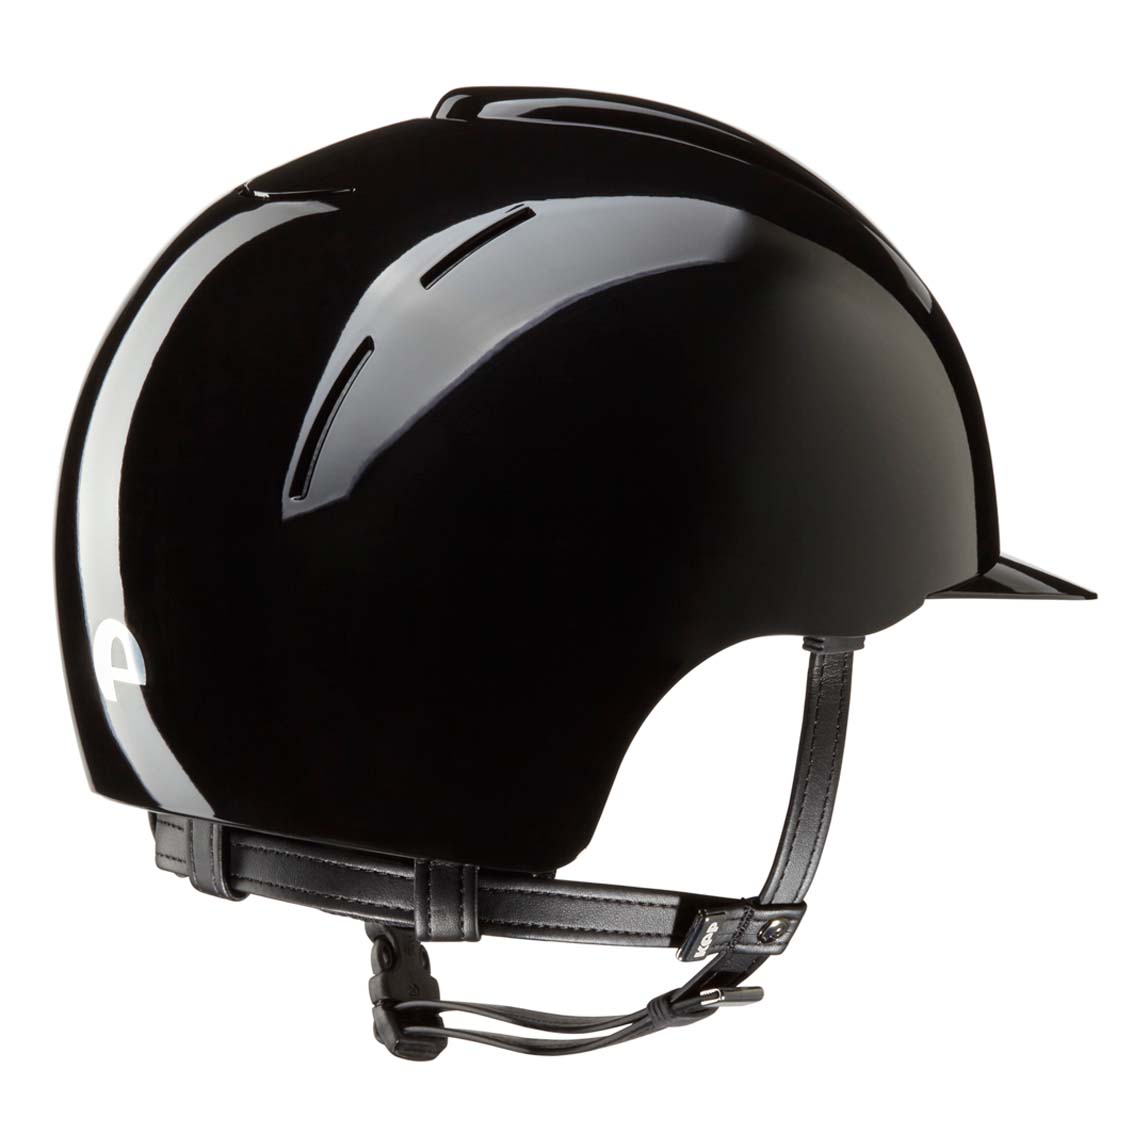 KEP brand black equestrian helmet, sleek design with chinstrap.